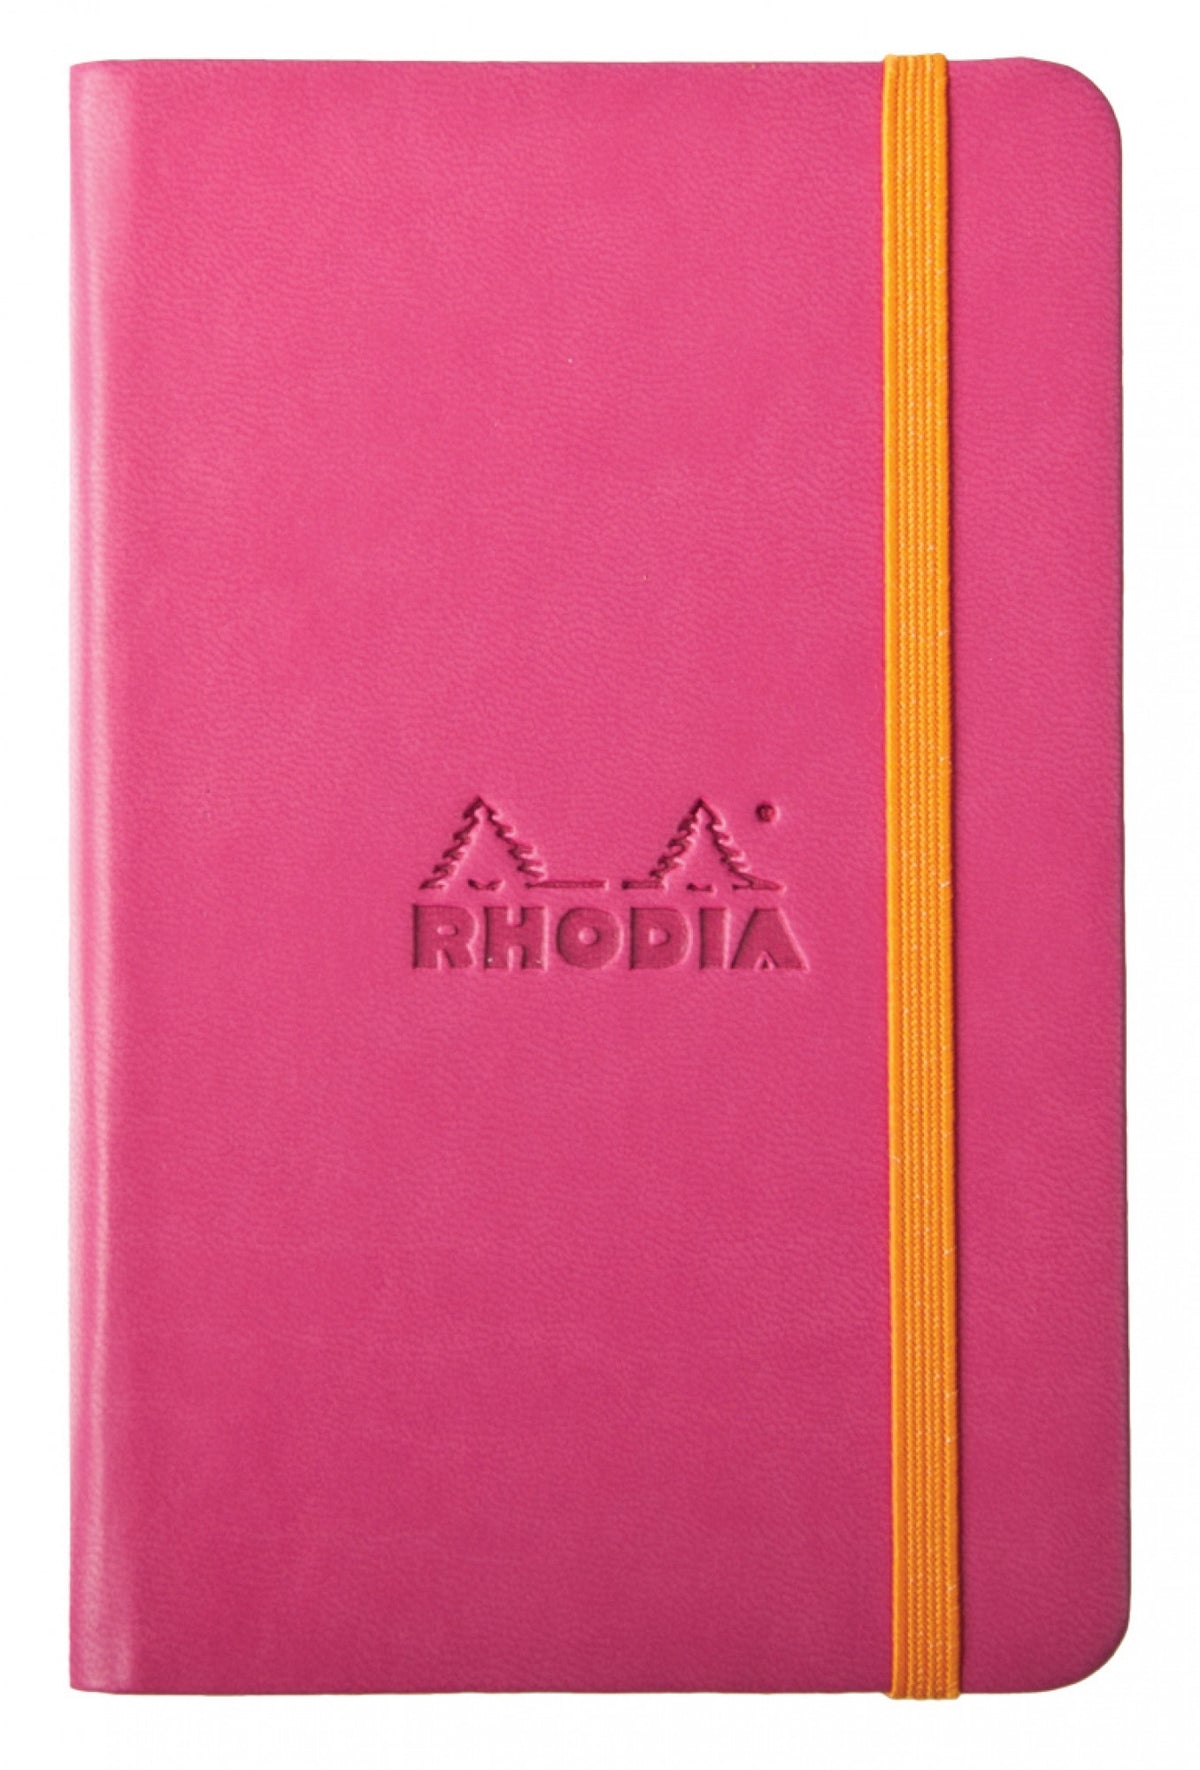 Rhodia Rhodiarama Webnotebook Hardcover A5 - Raspberry